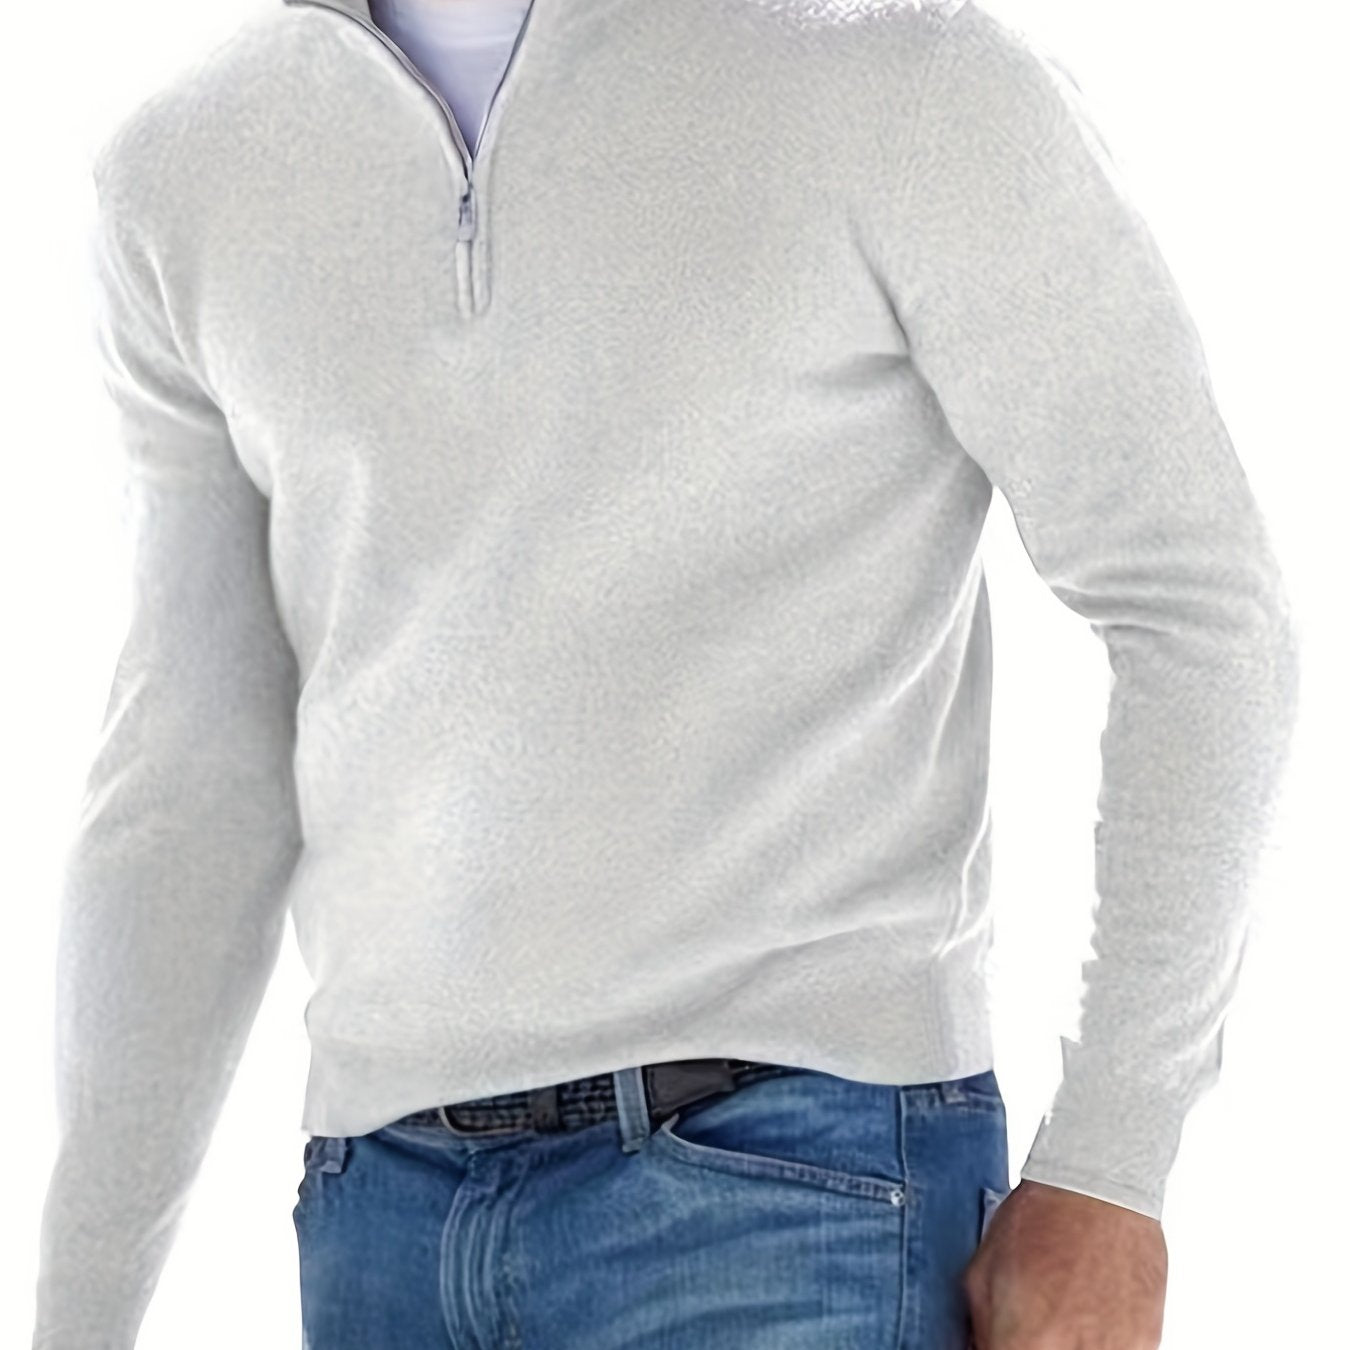 gbolsos  Fleece Long Sleeves Zipper Stand Collar Pullover Thermal Underwear Tops, Men's Casual Top Polo Shirts